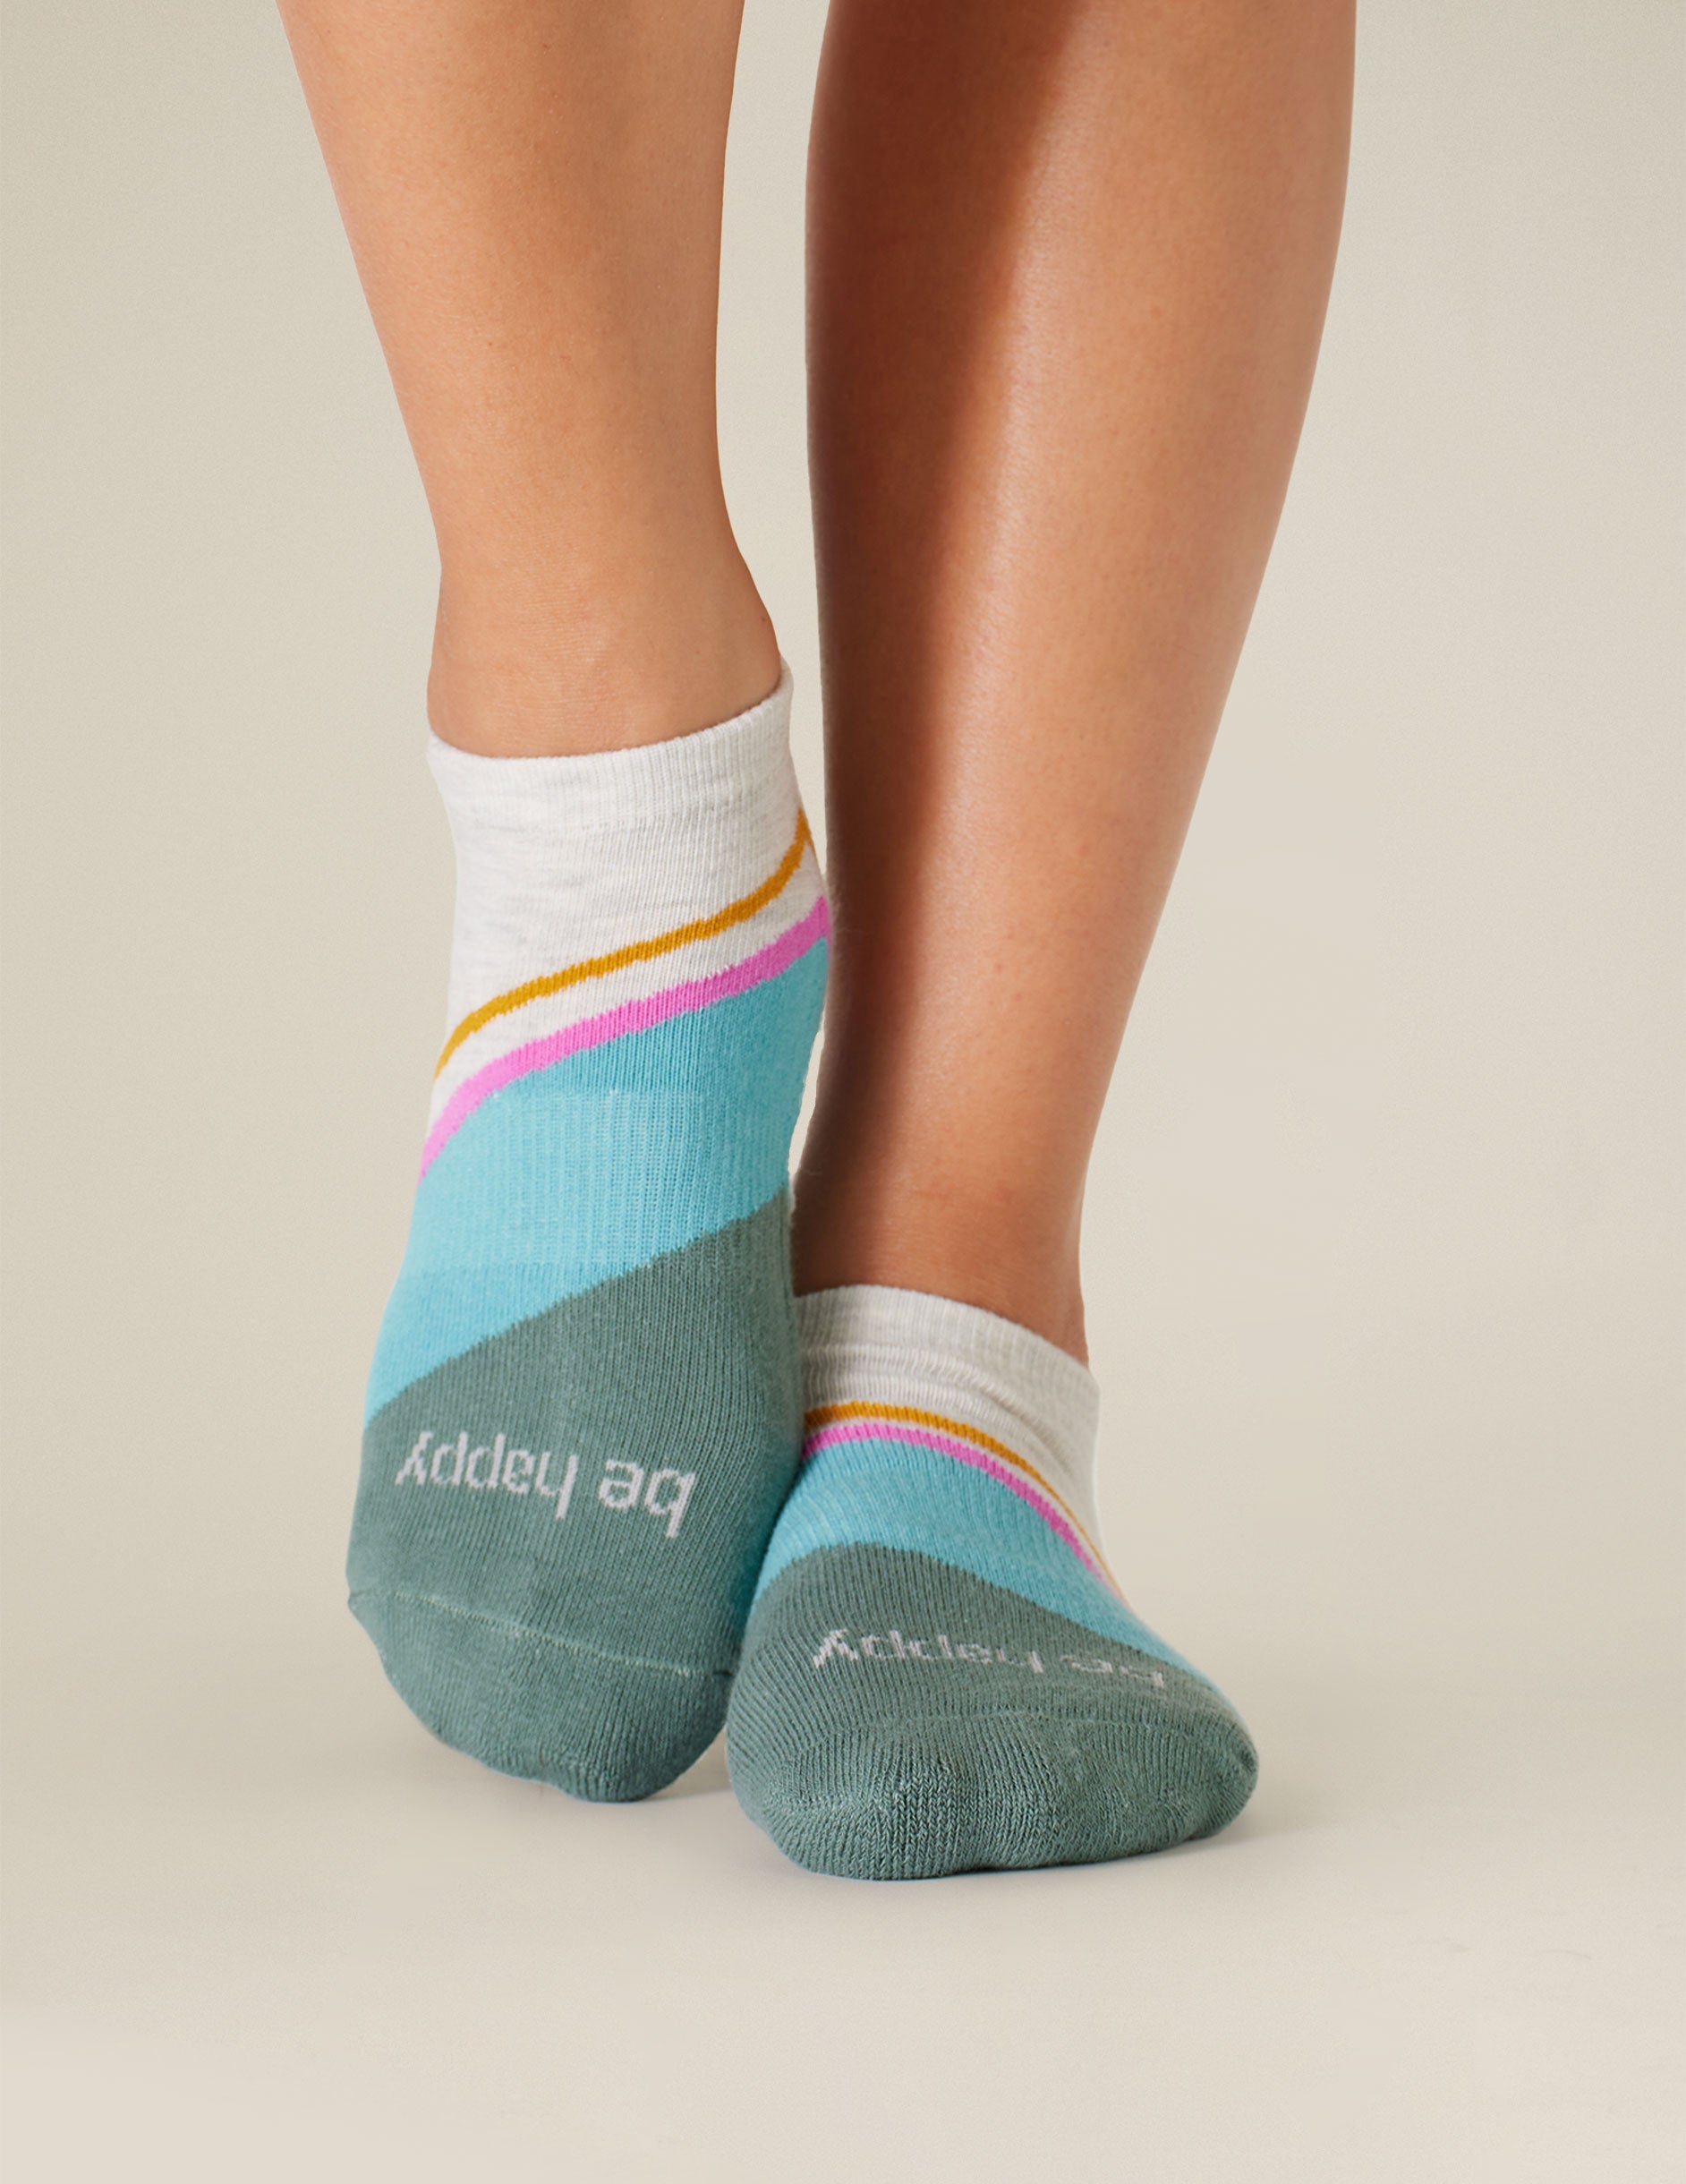 blue, white, pink, and orange ankle grip socks. 